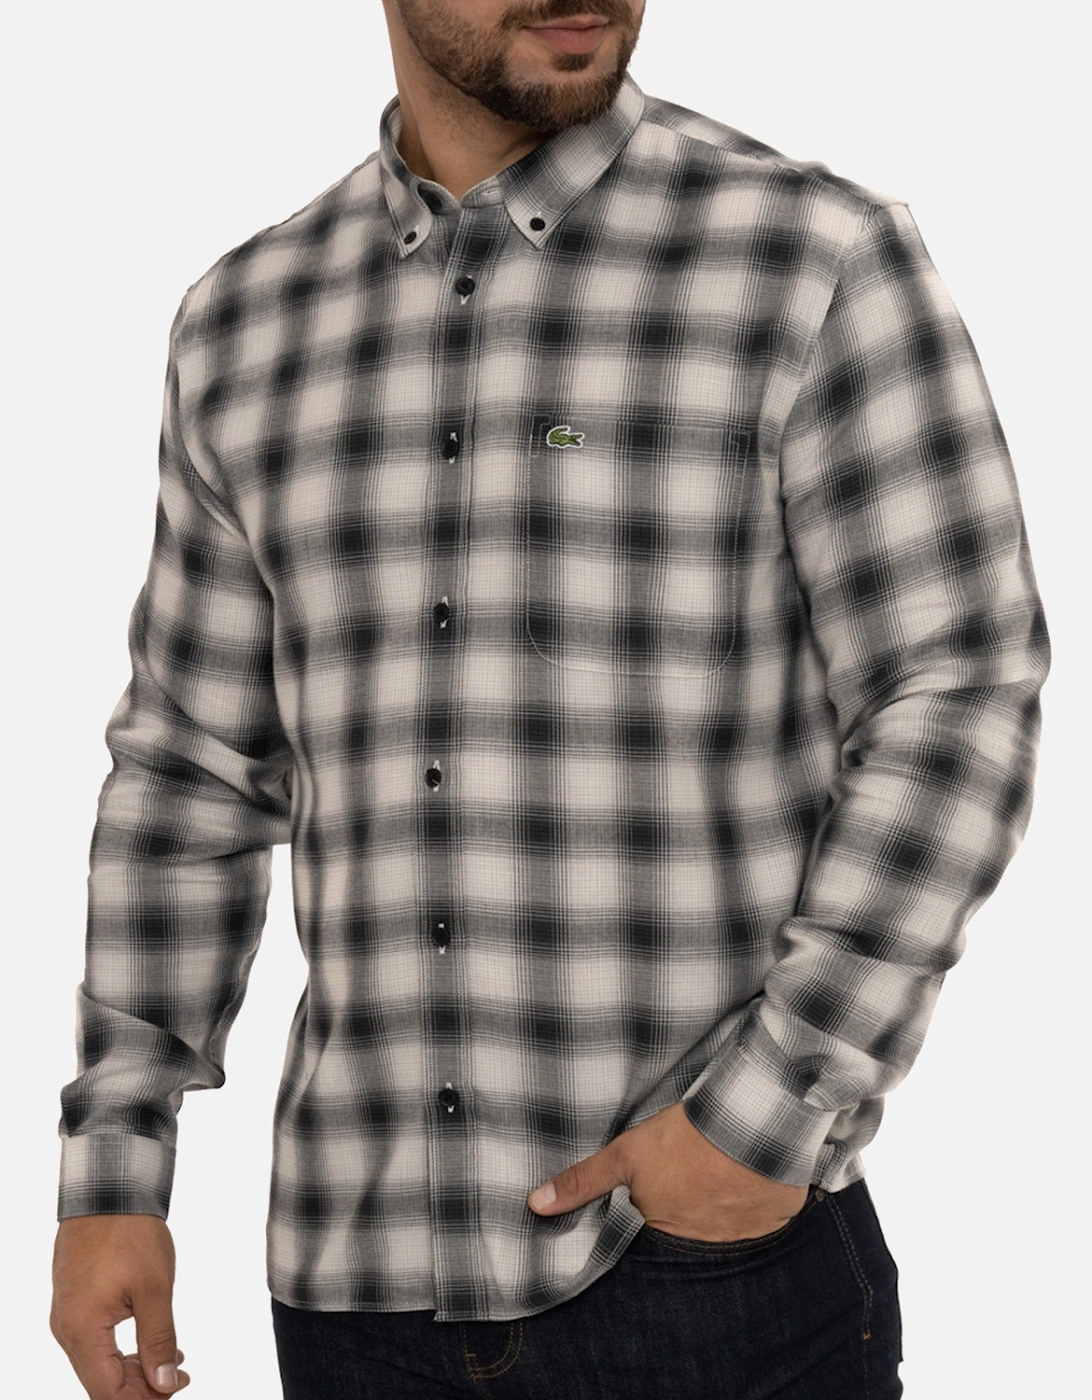 Mens Large Check Pattern Shirt (Grey/Black)